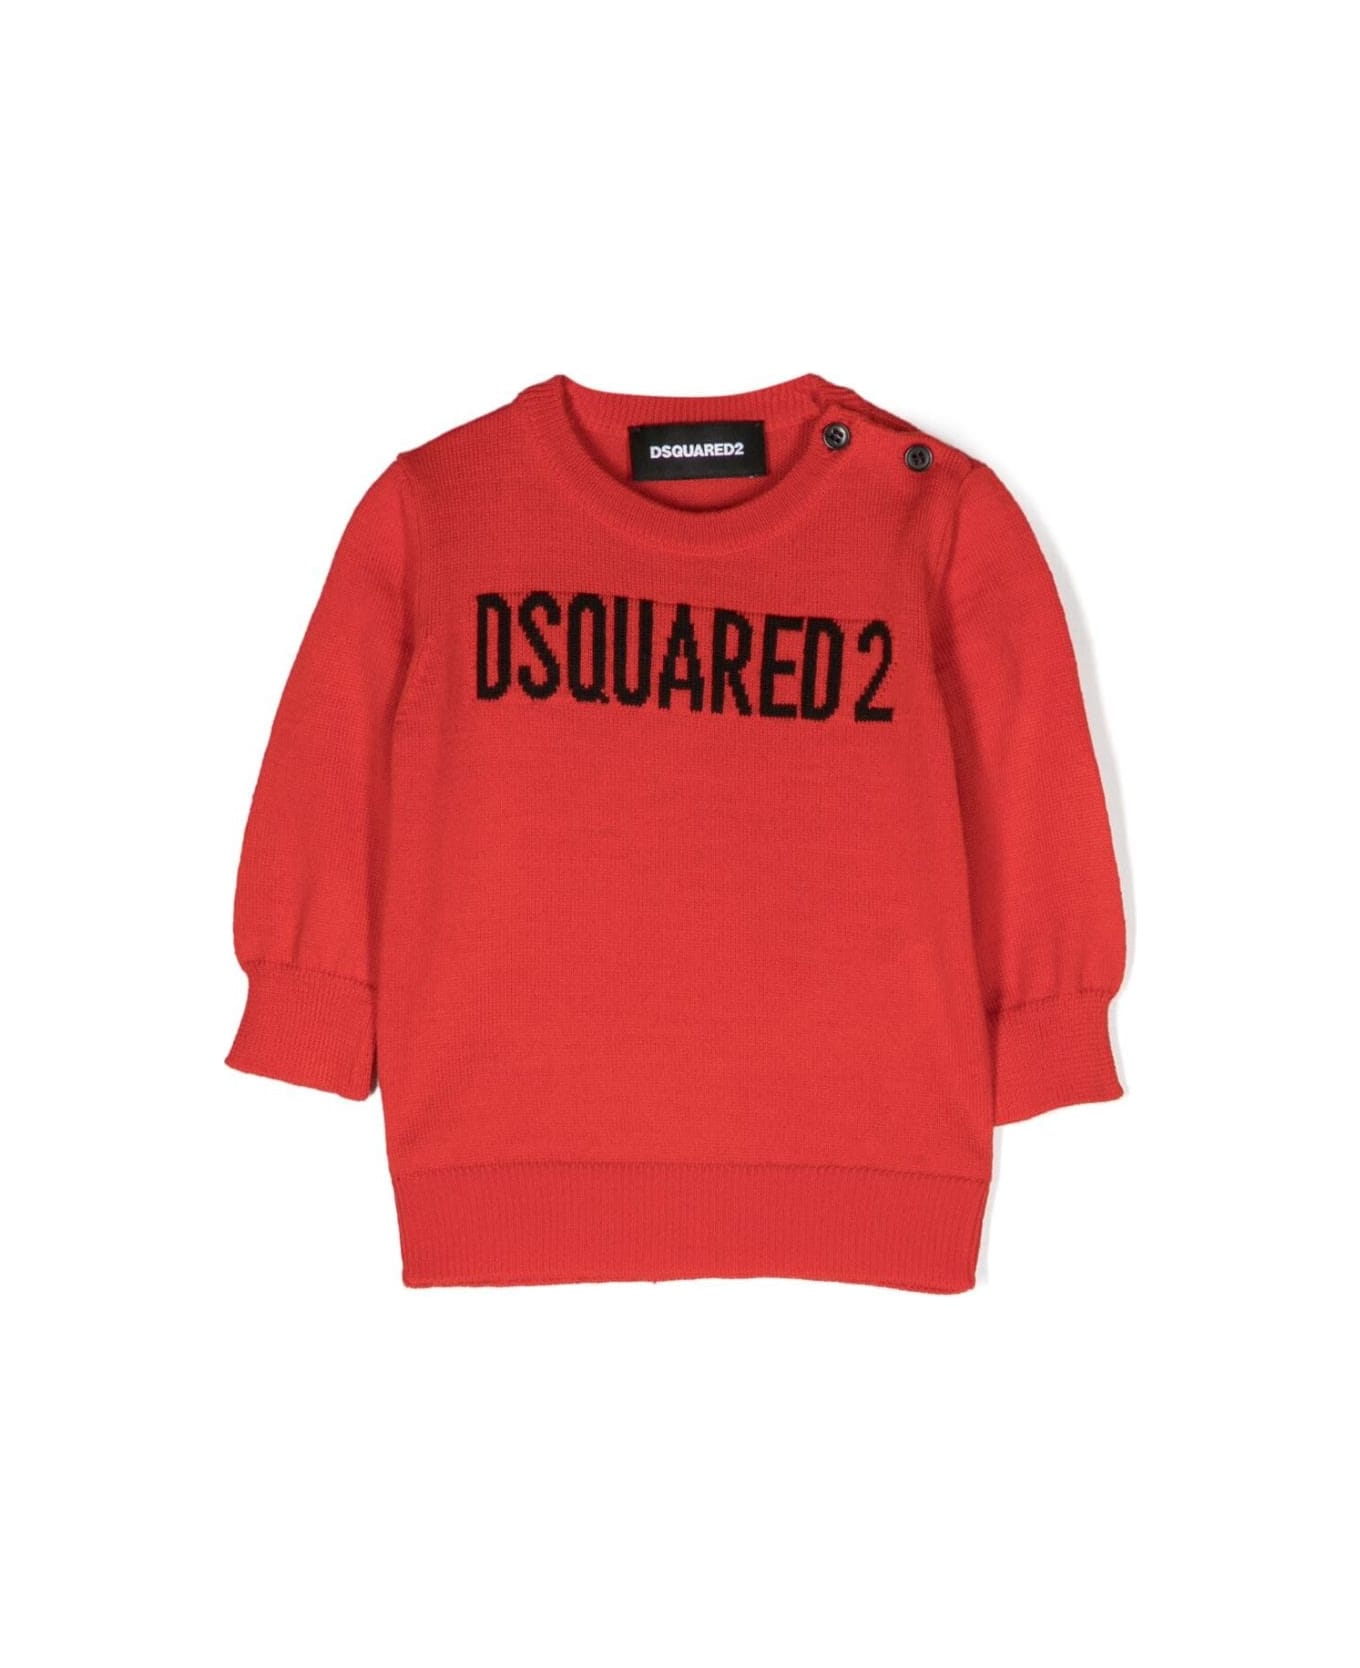 Dsquared2 Intarsia Sweater - Red